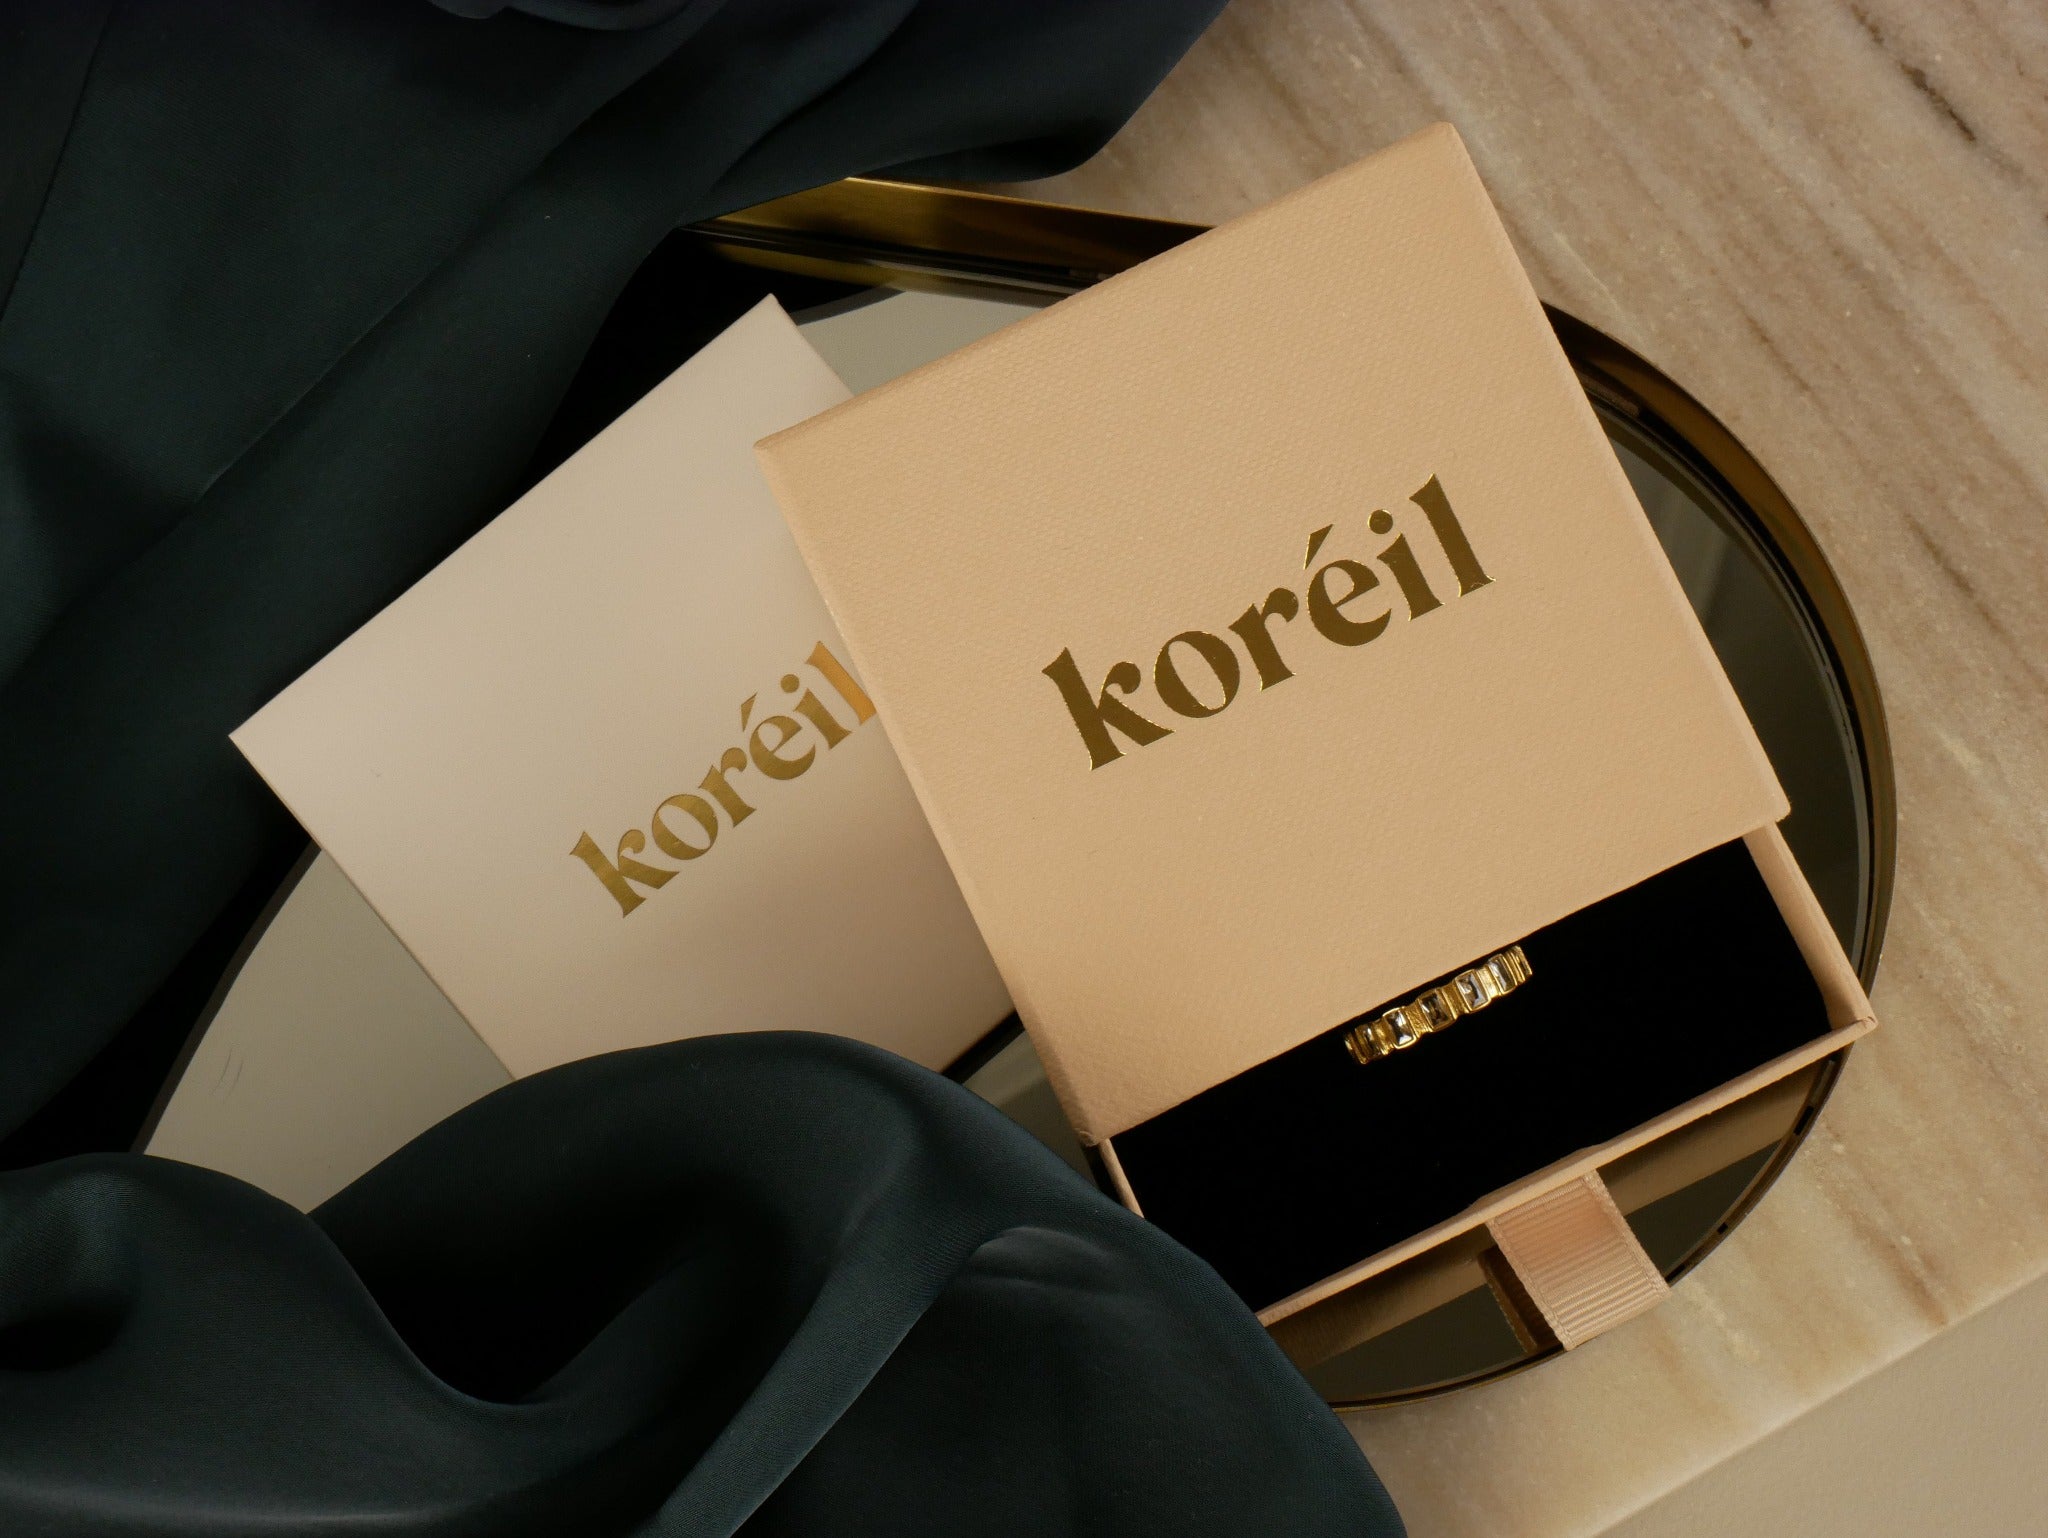 Koréil Jewelry box by Koréil